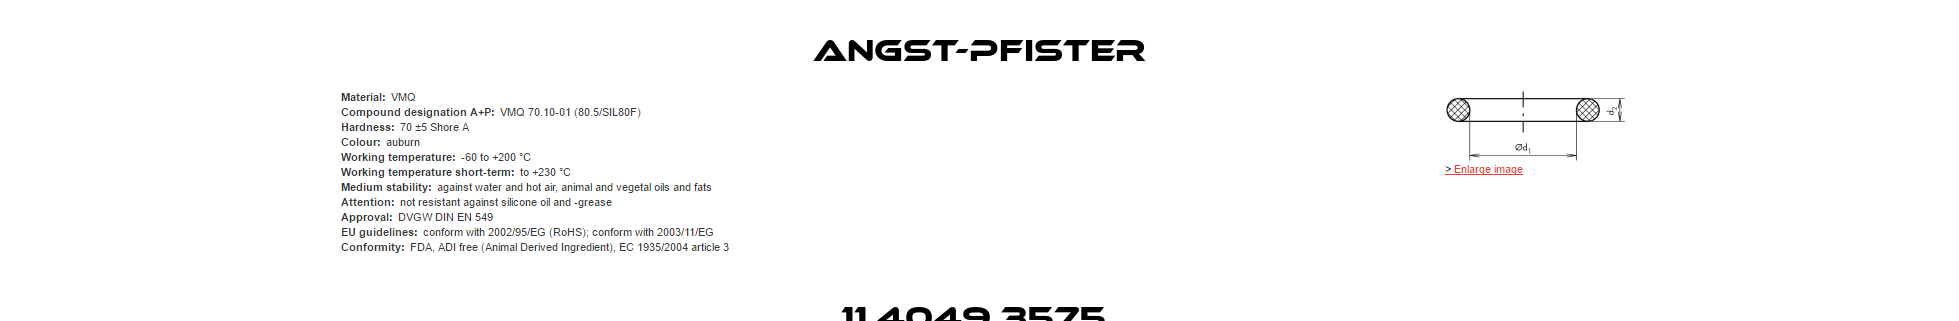 11.4049.3575  Angst-Pfister